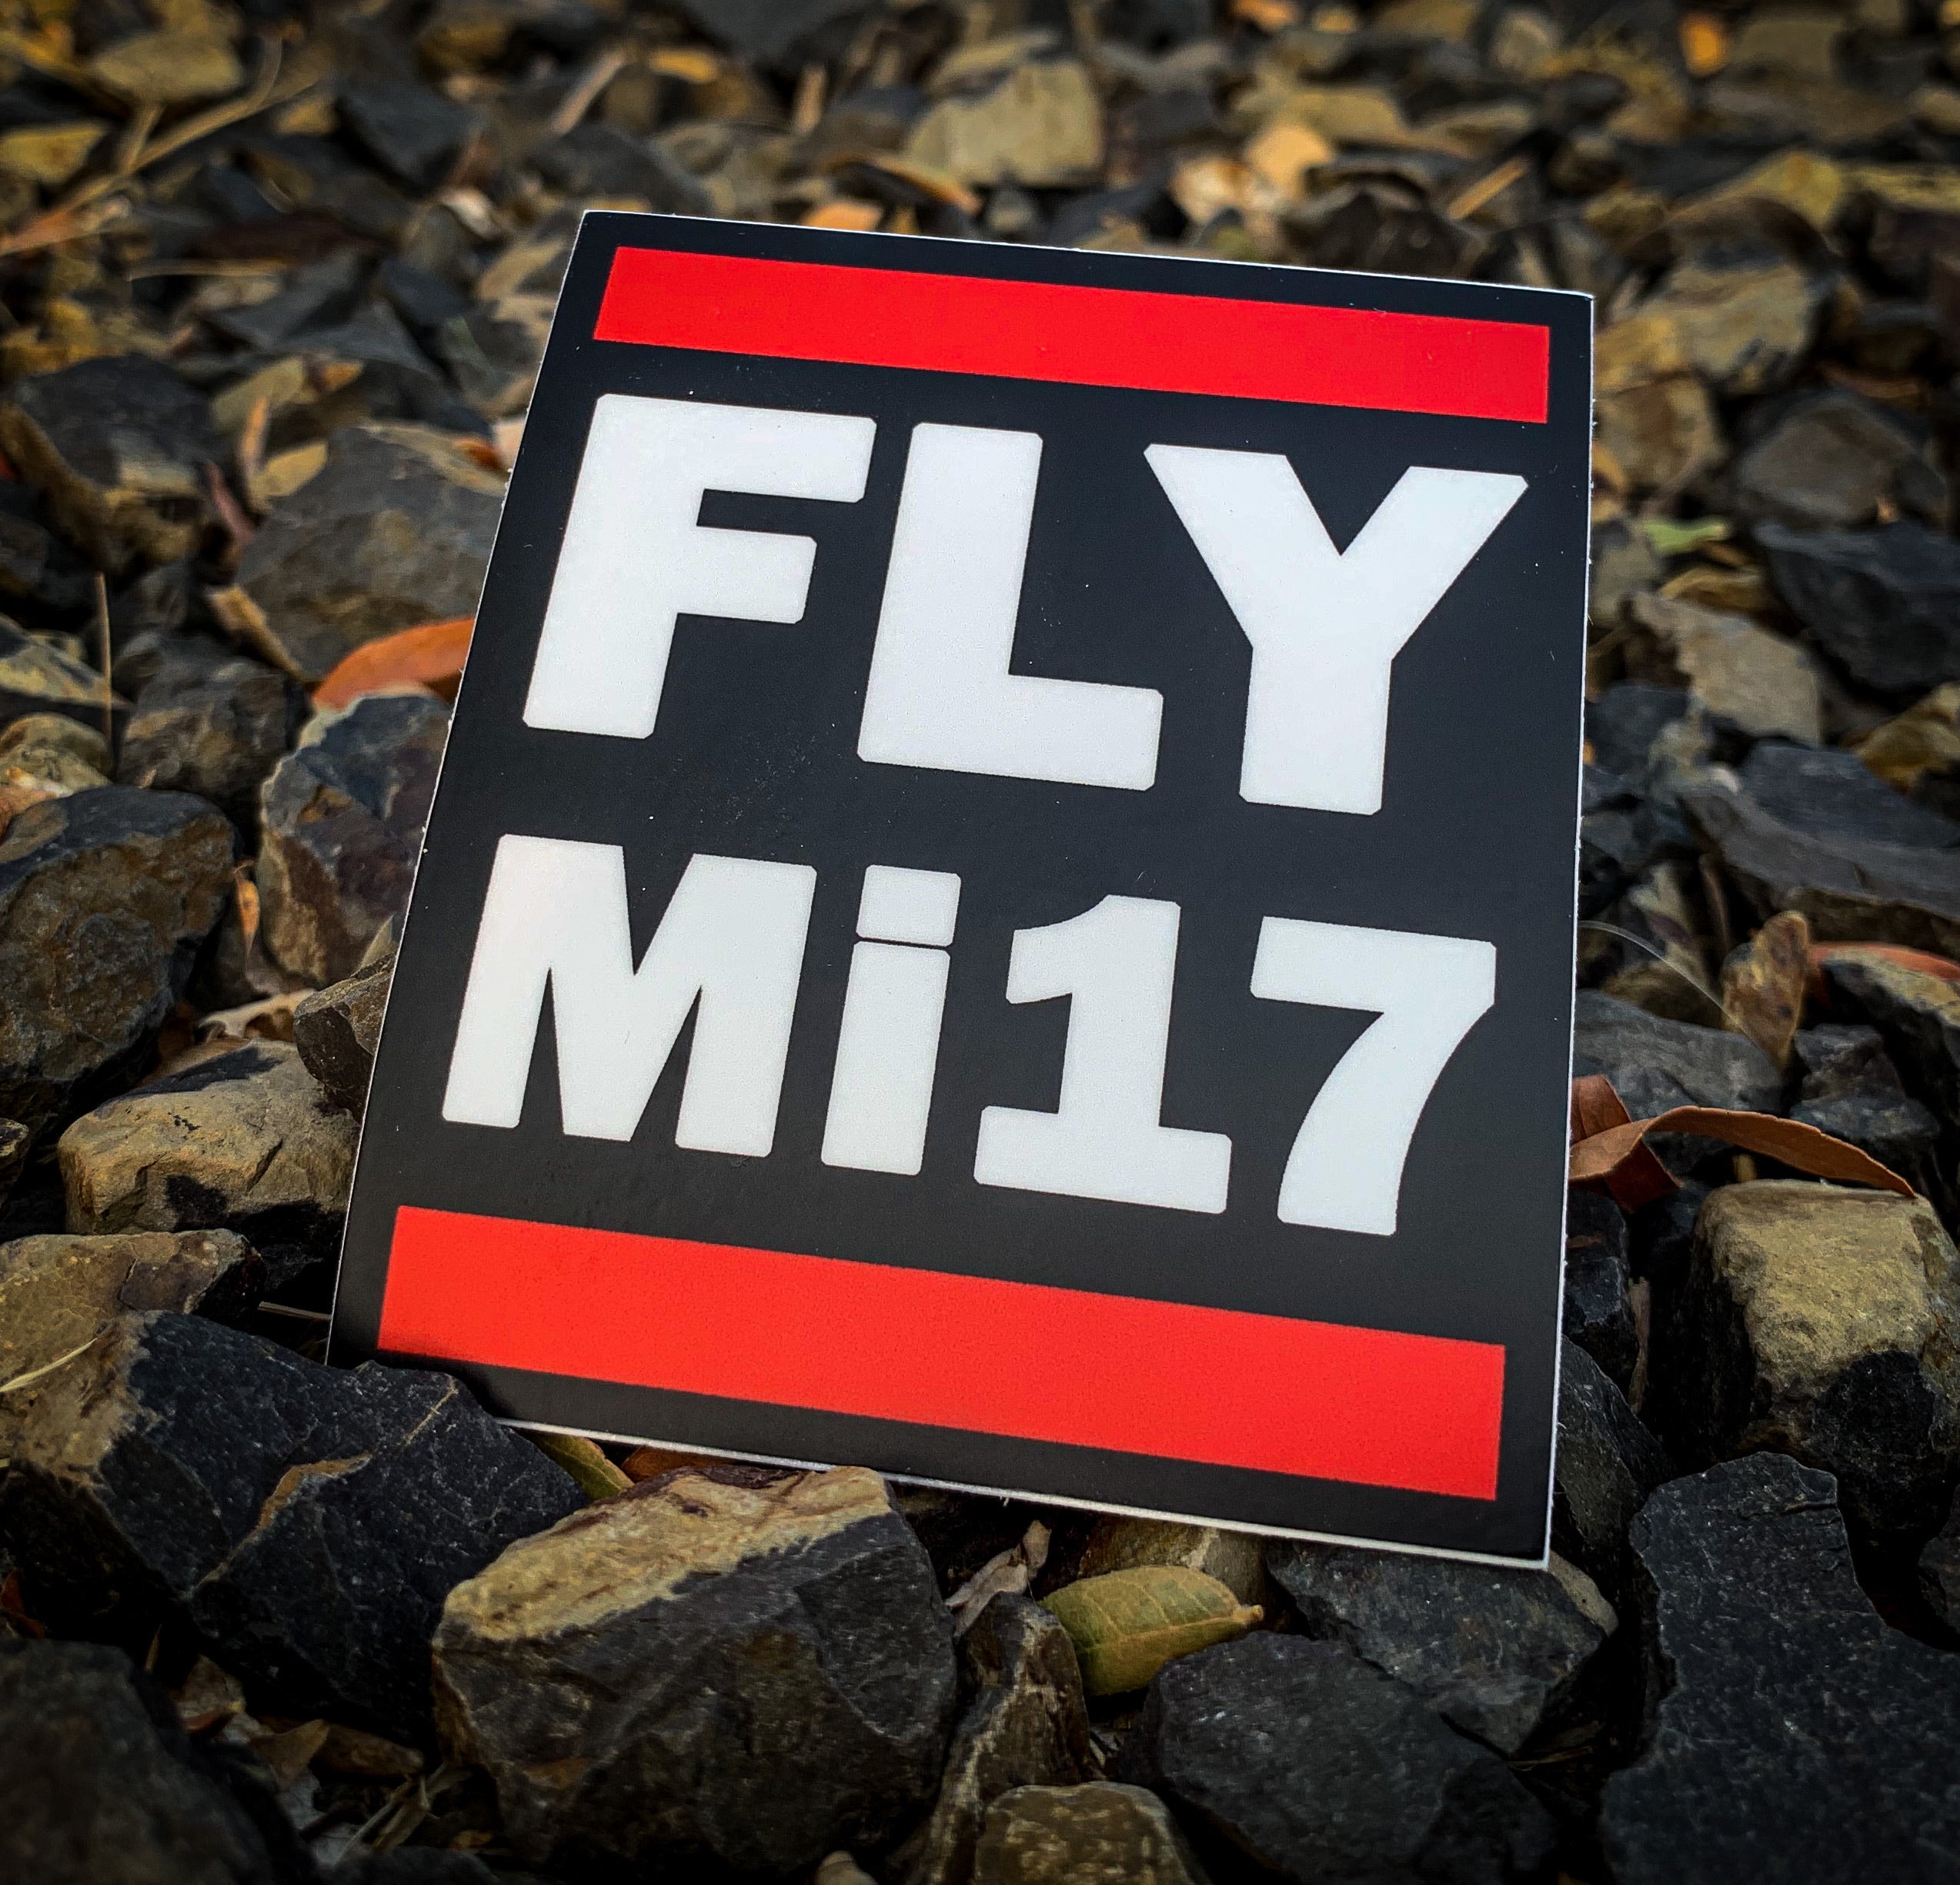 FLY MI-17